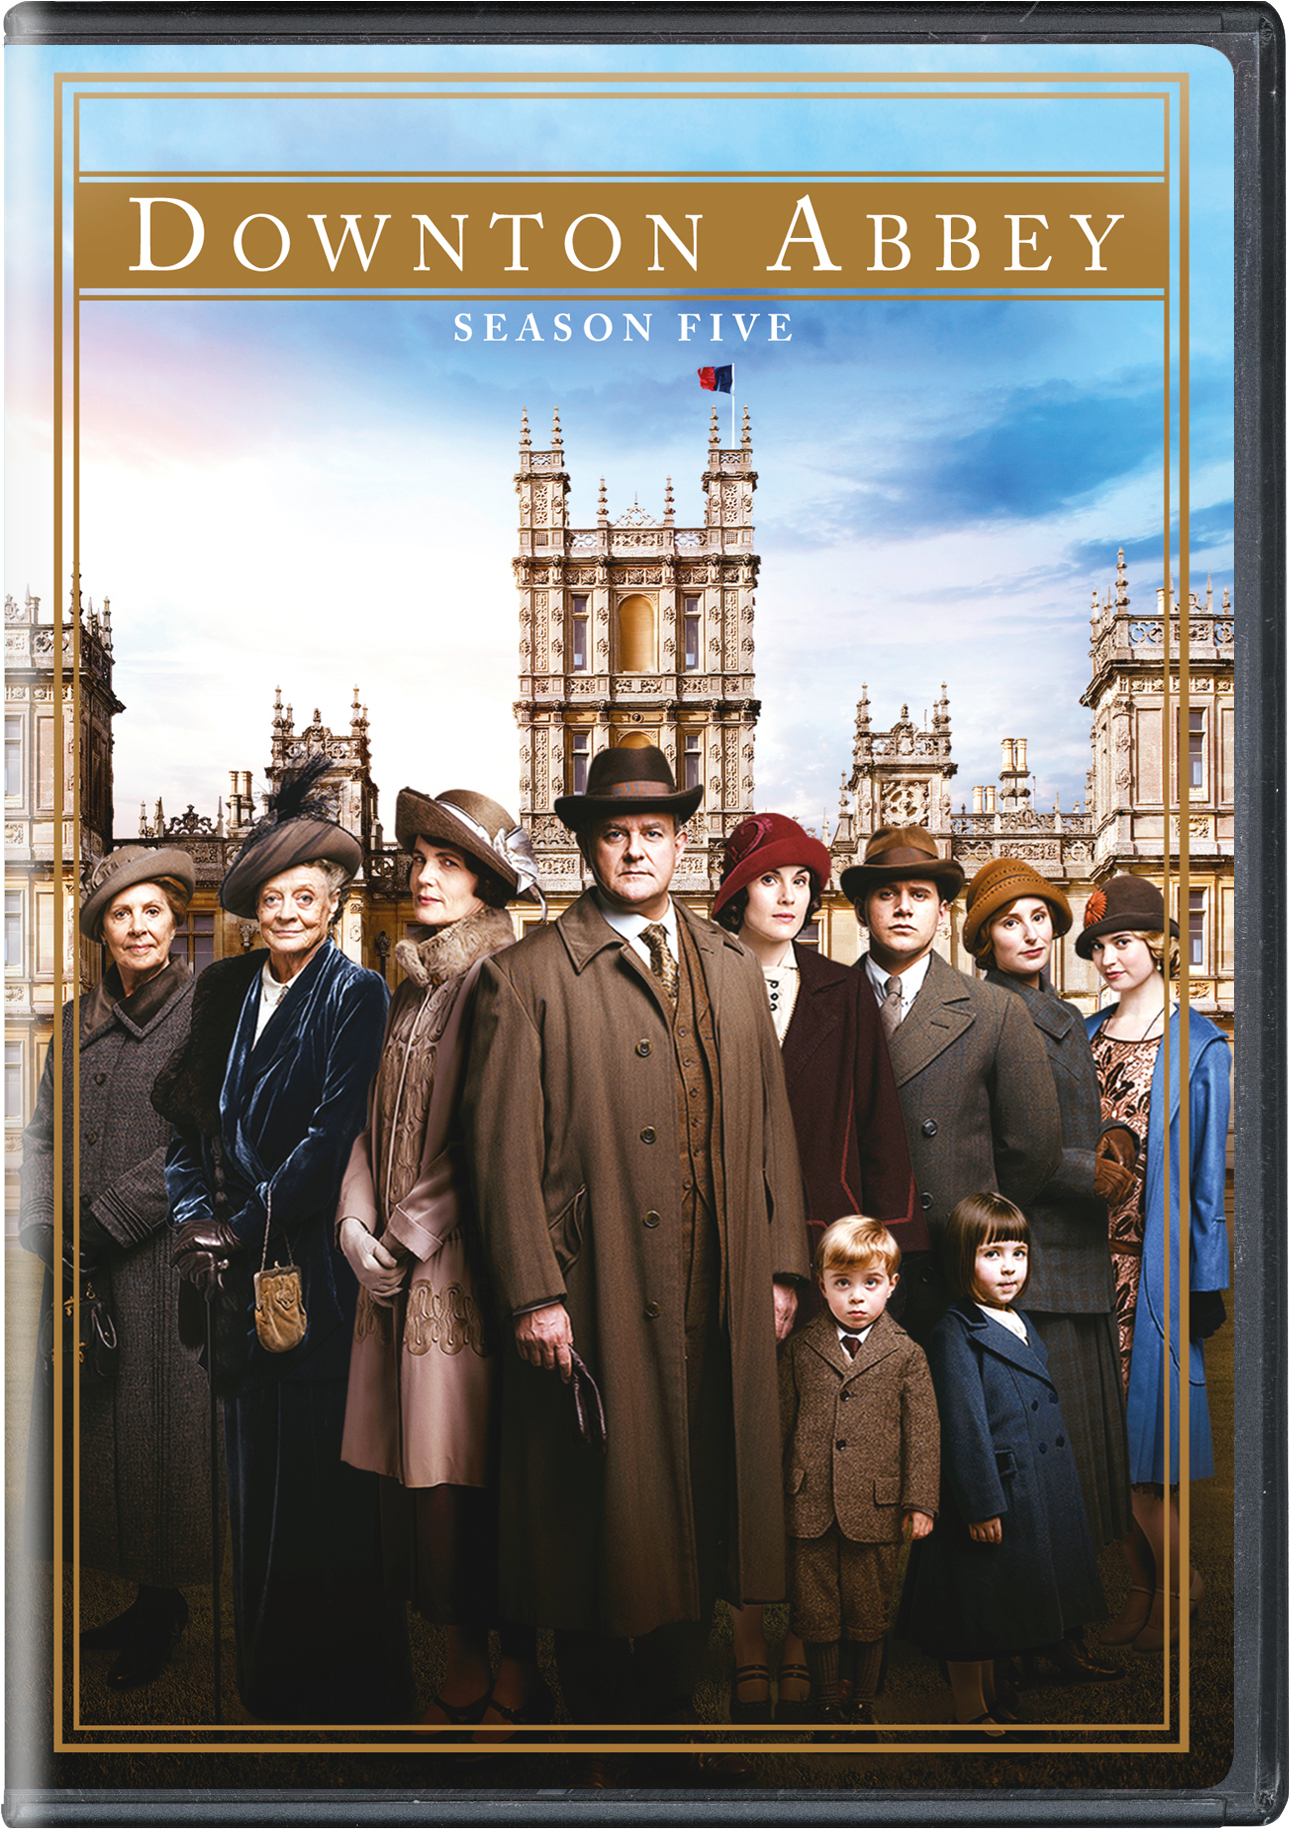 Downton Abbey: Season Five - DVD   - Drama Movies On DVD - Movies On GRUV